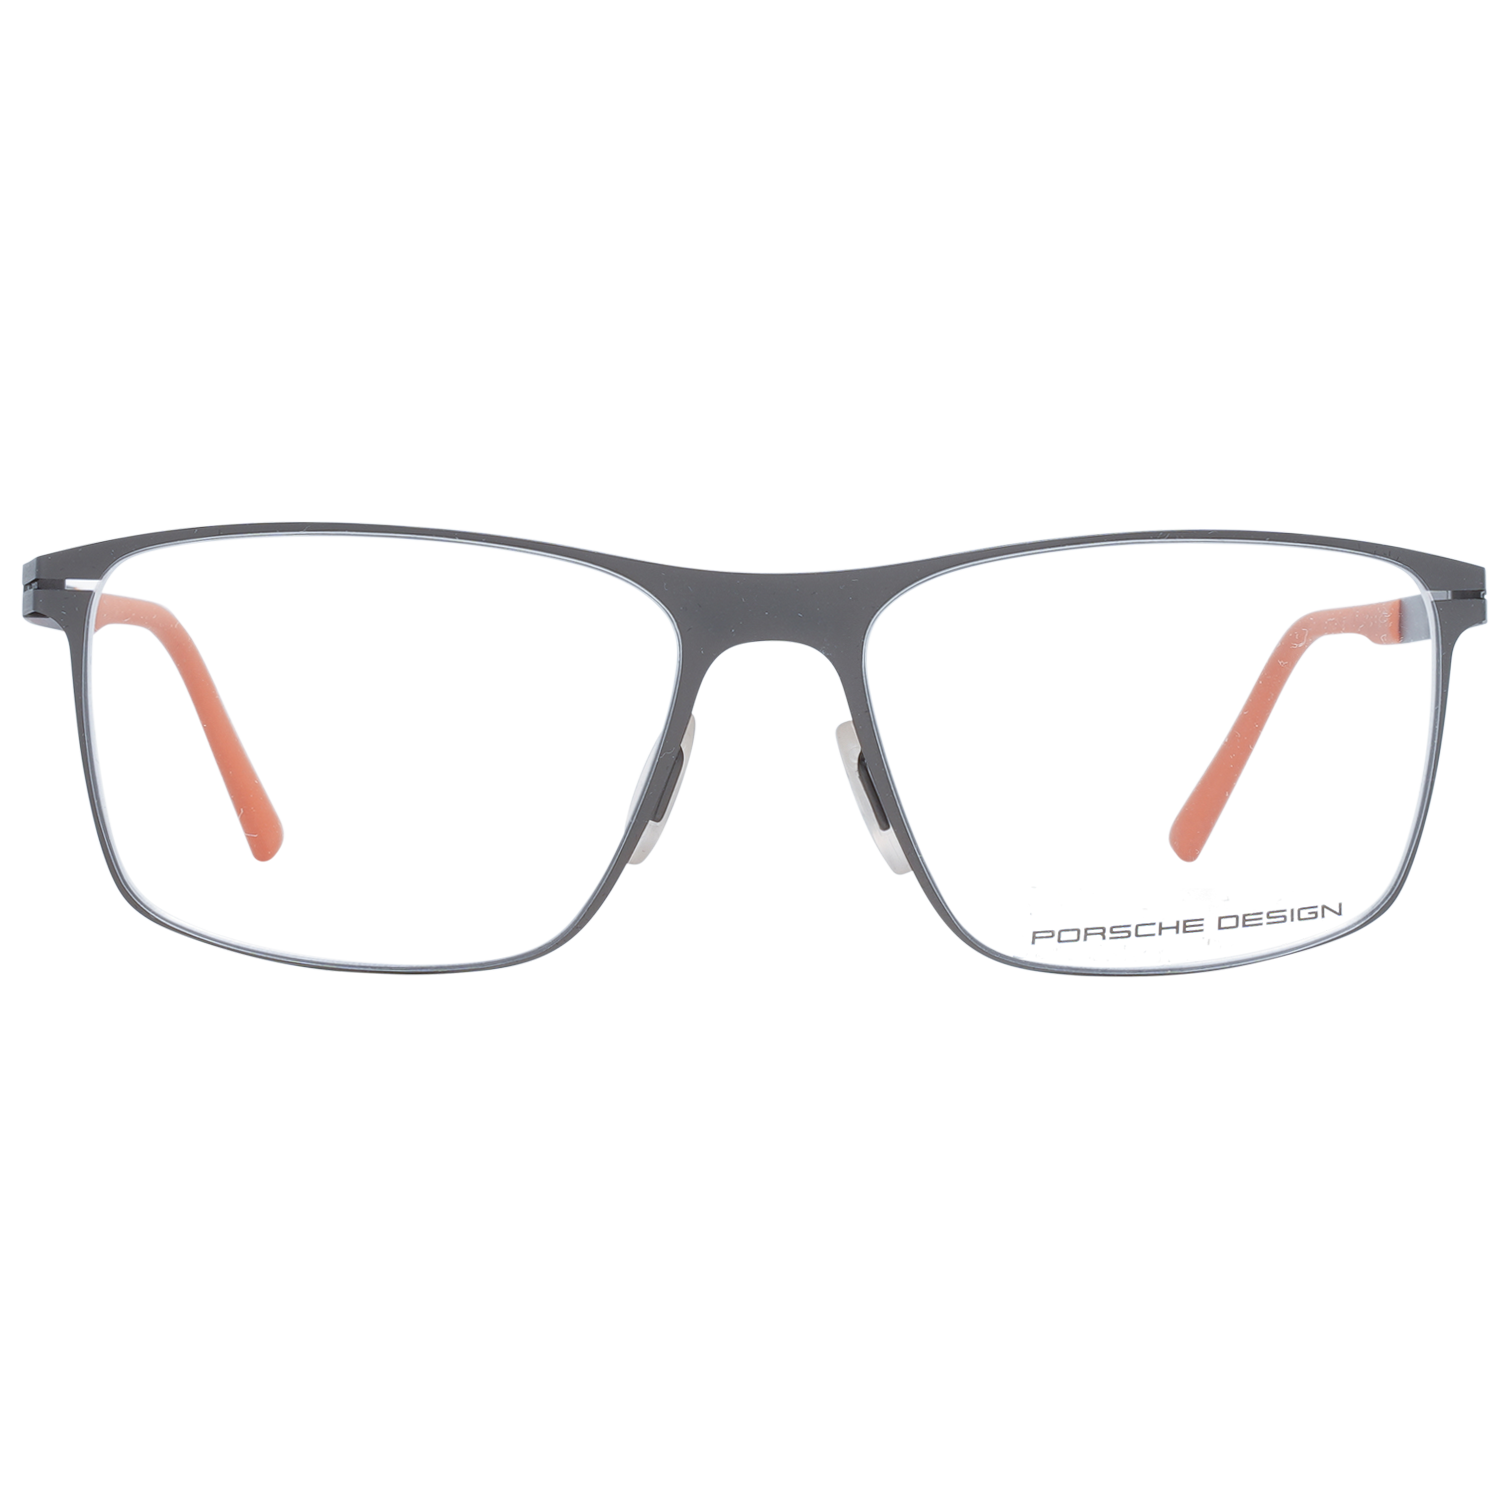 Porsche Design Eyeglasses Porsche Design Glasses Frames P8256 C 55 Eyeglasses Eyewear UK USA Australia 